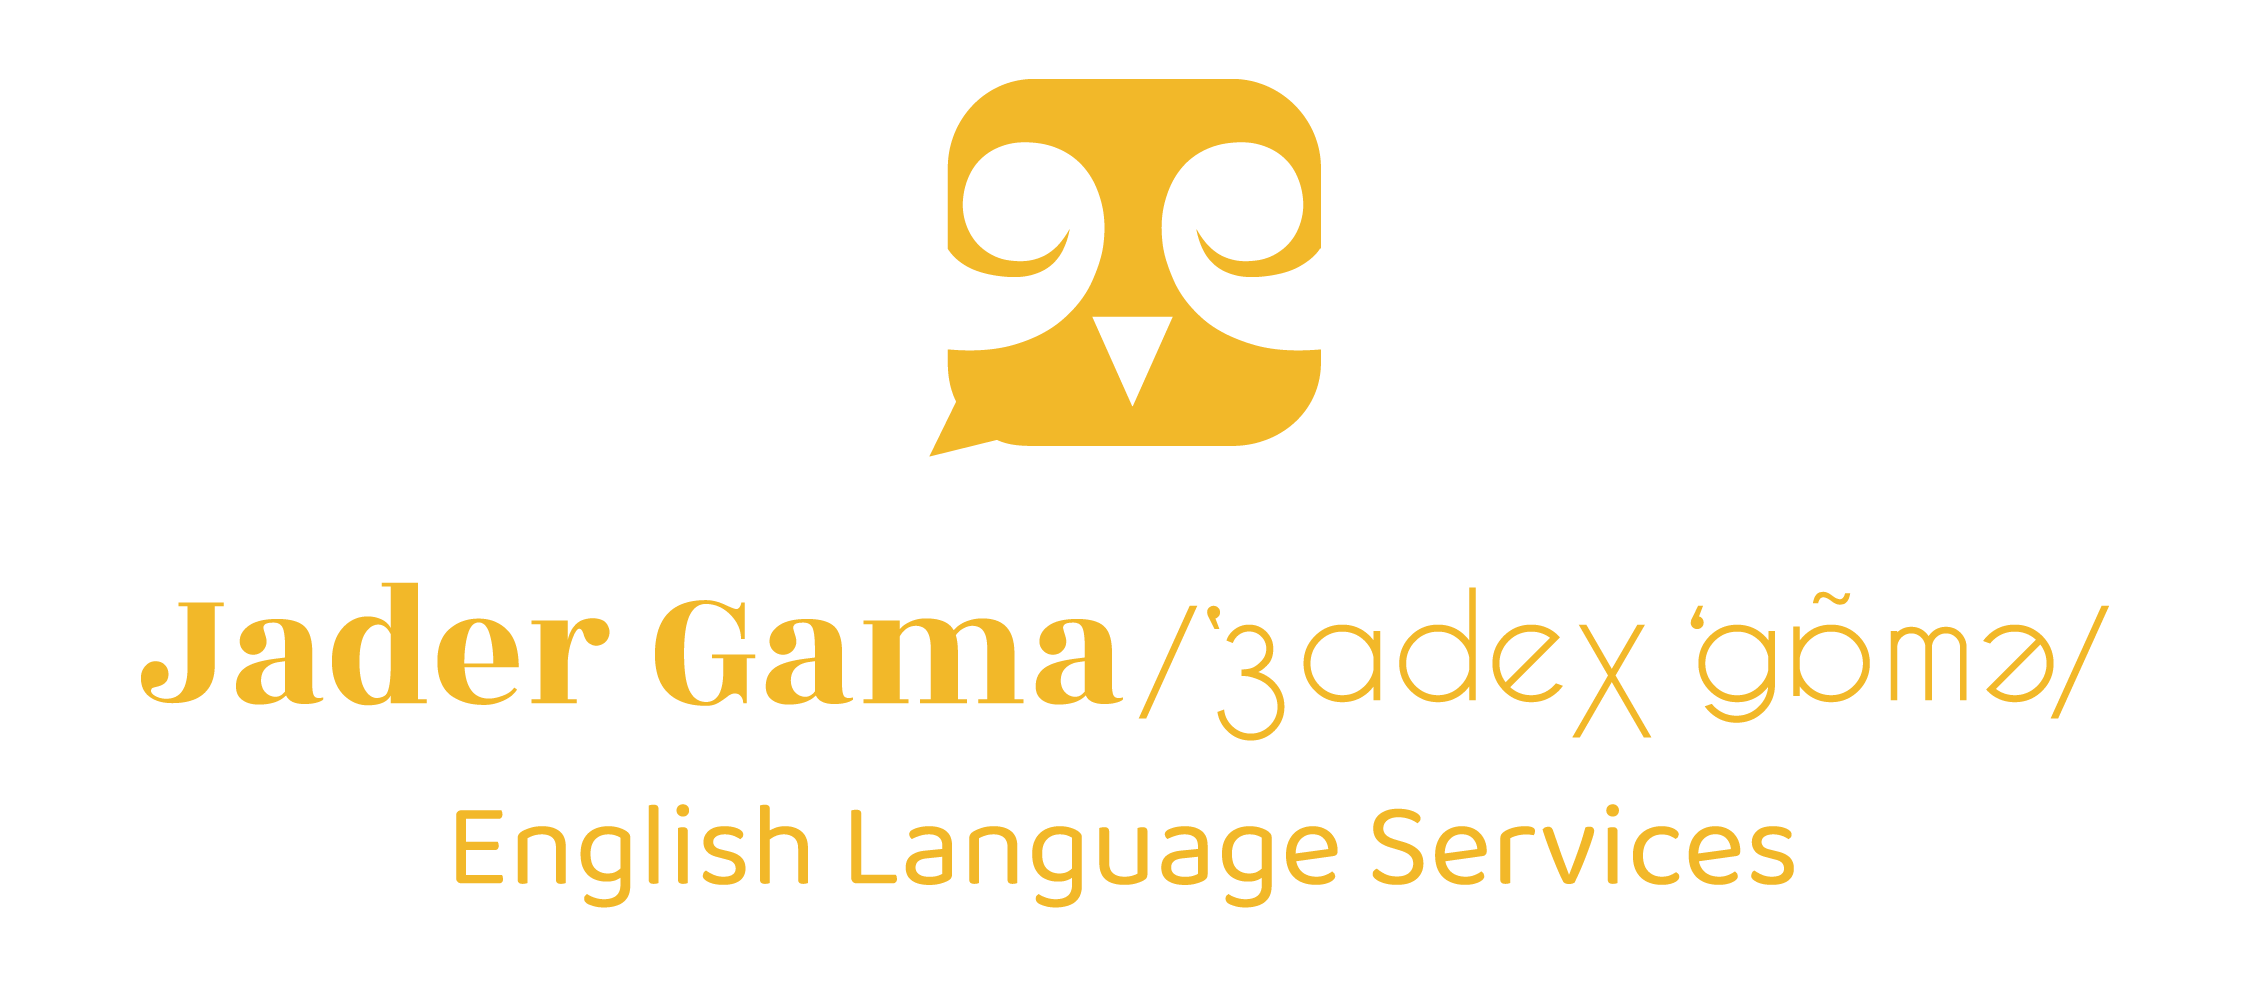 Jader Gama - English Language Services